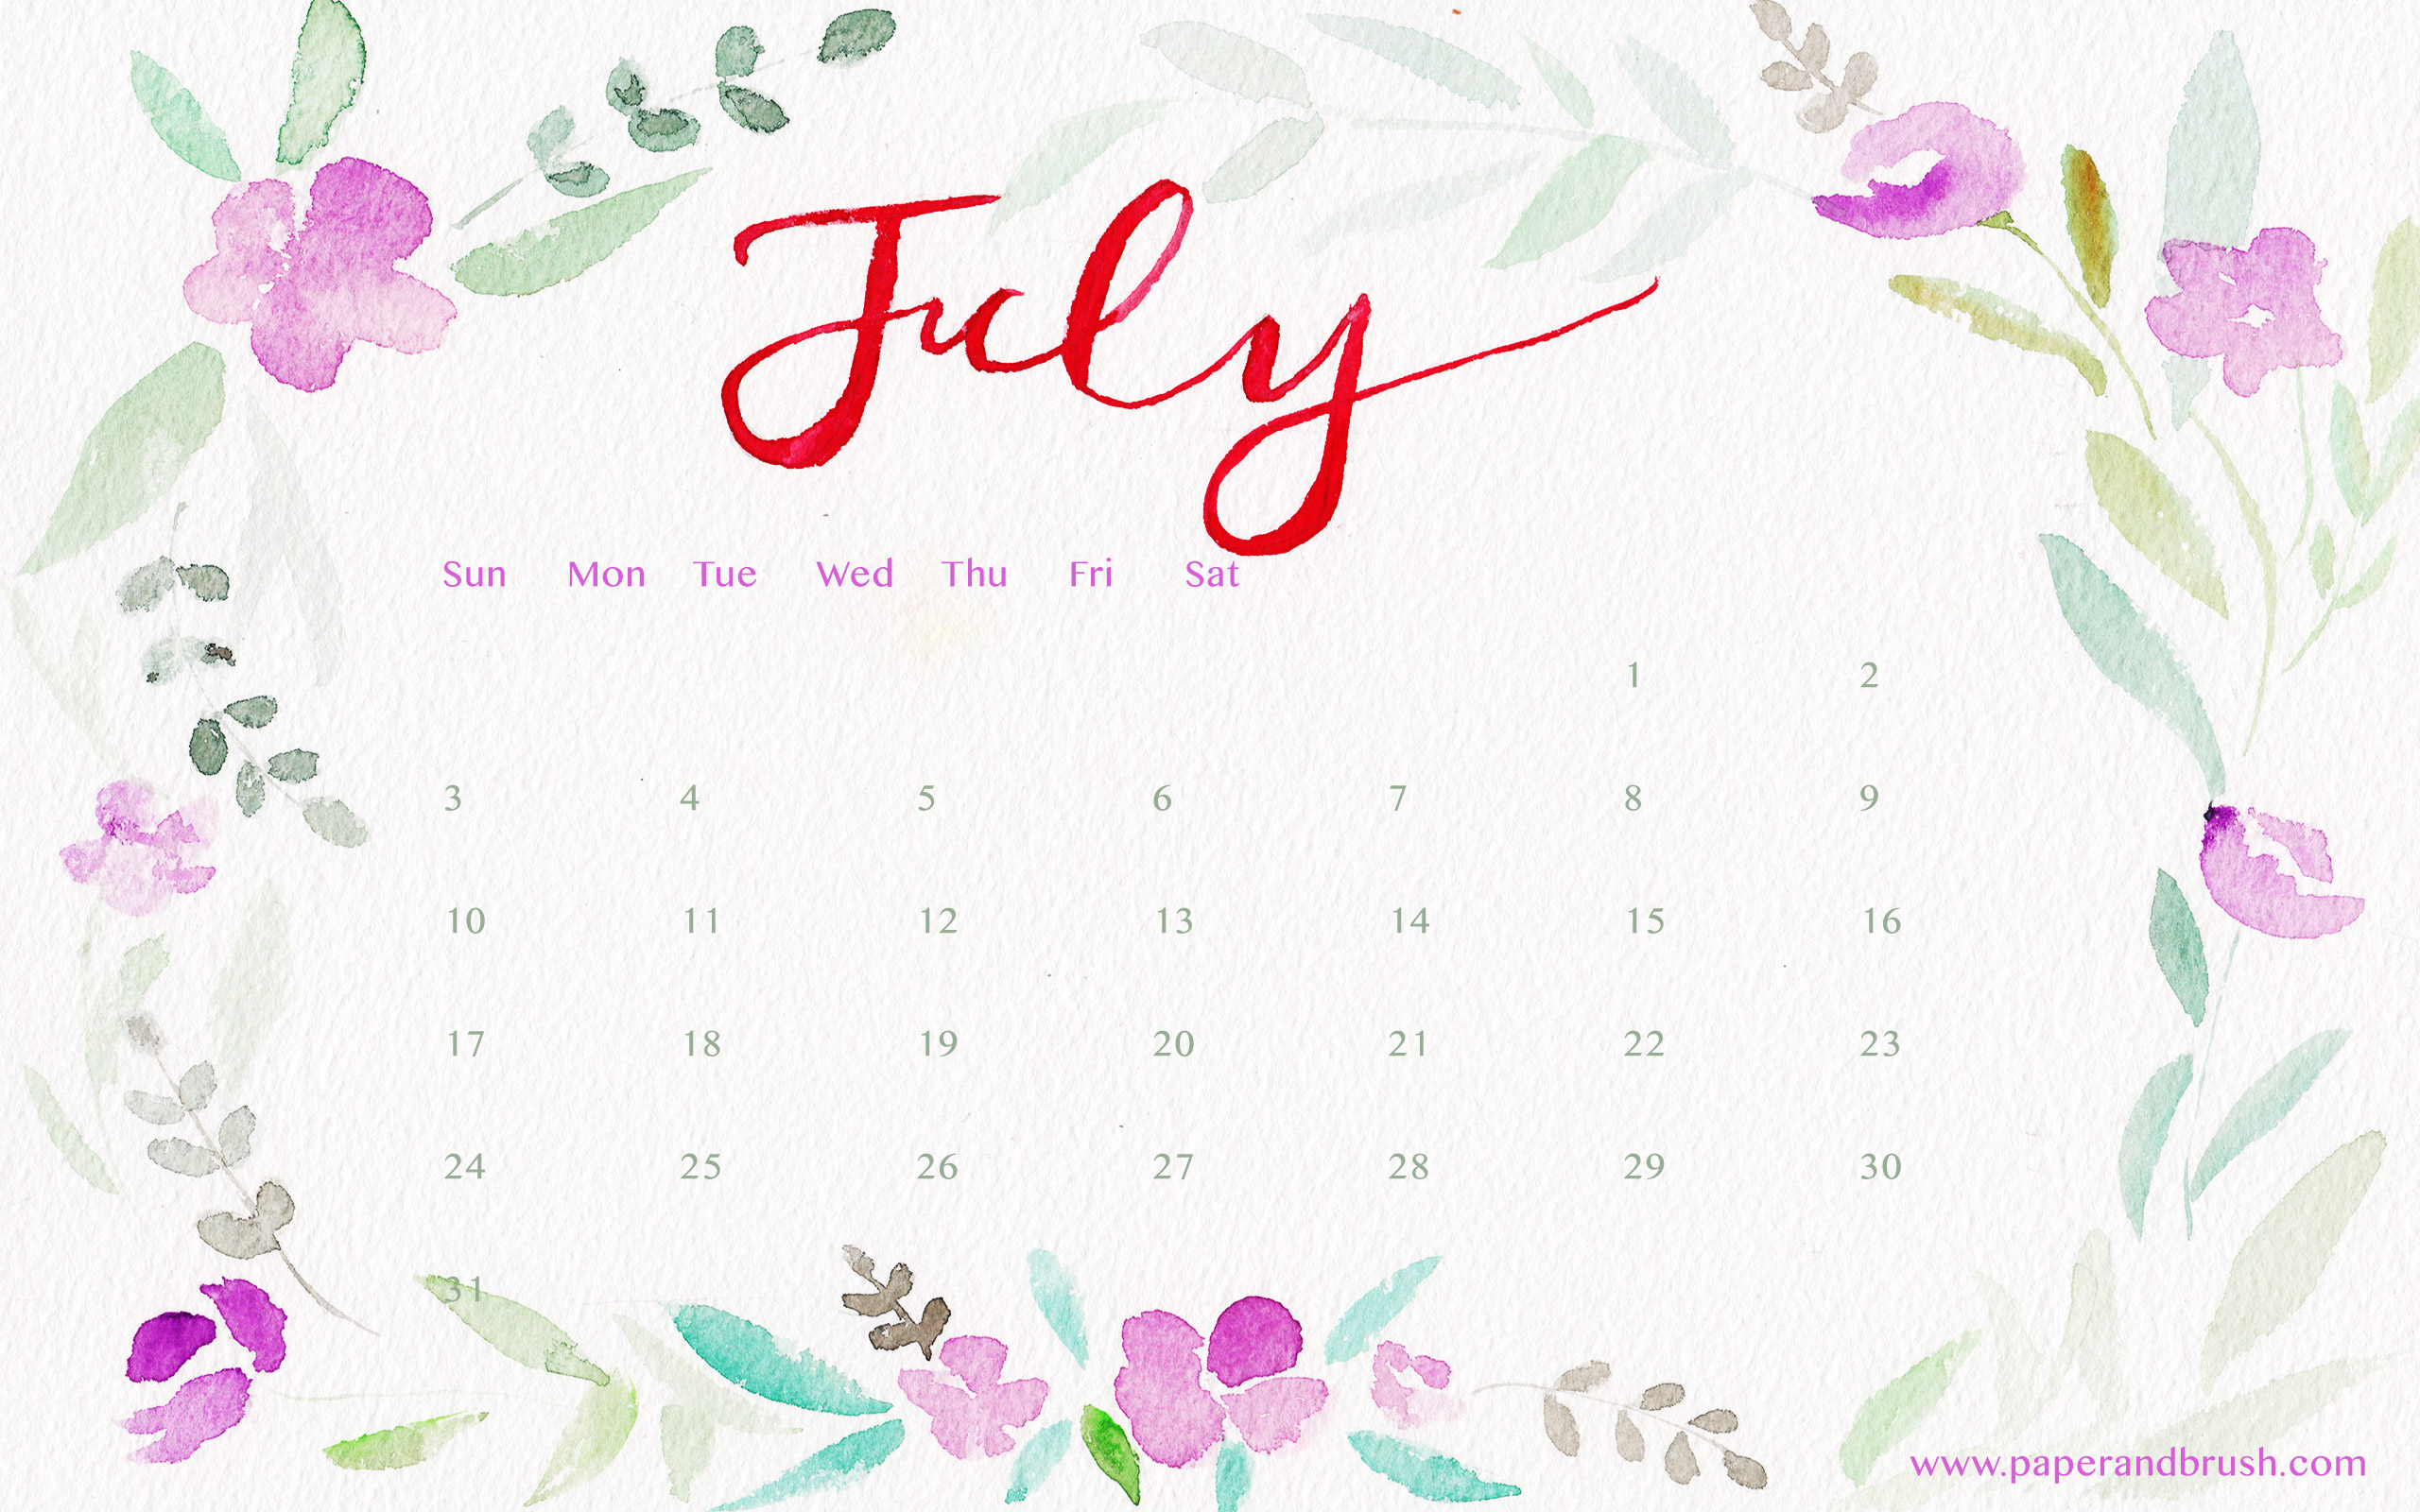 Free July Wallpaper With Calendar   52DazheW Gallery 2560x1600